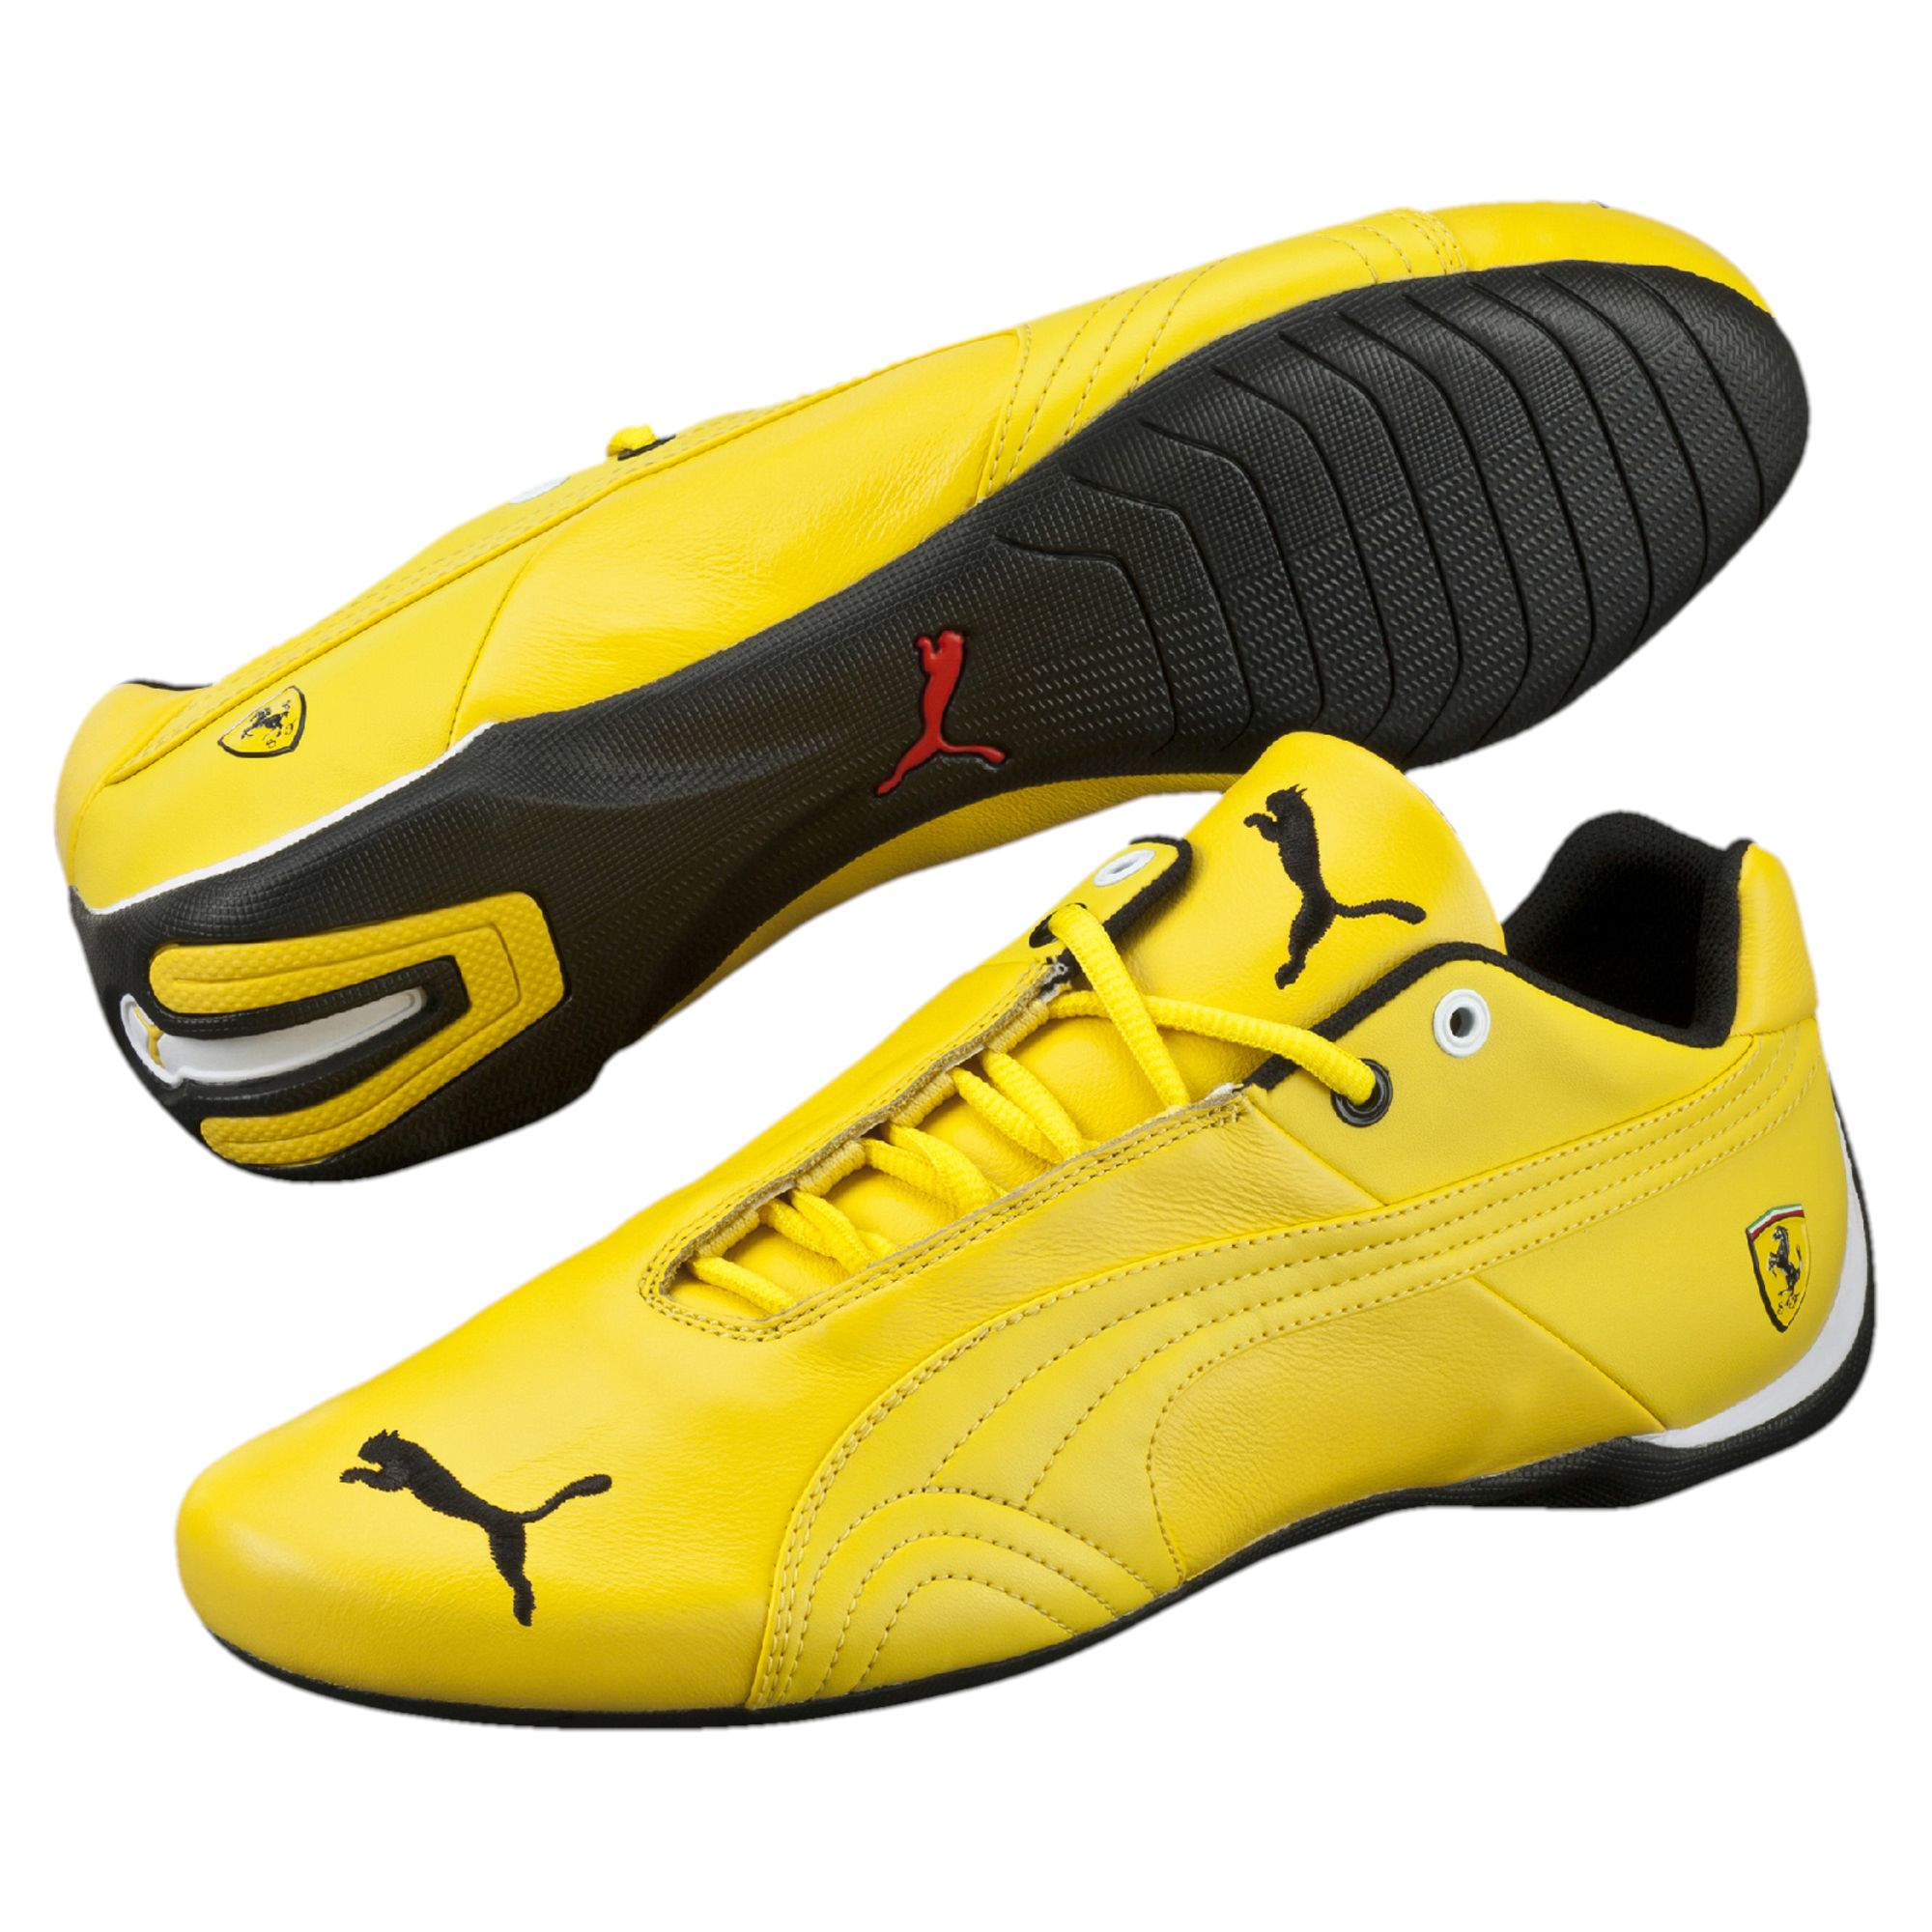 Lyst - Puma Ferrari Future Cat Leather Men's Shoes in Yellow for Men